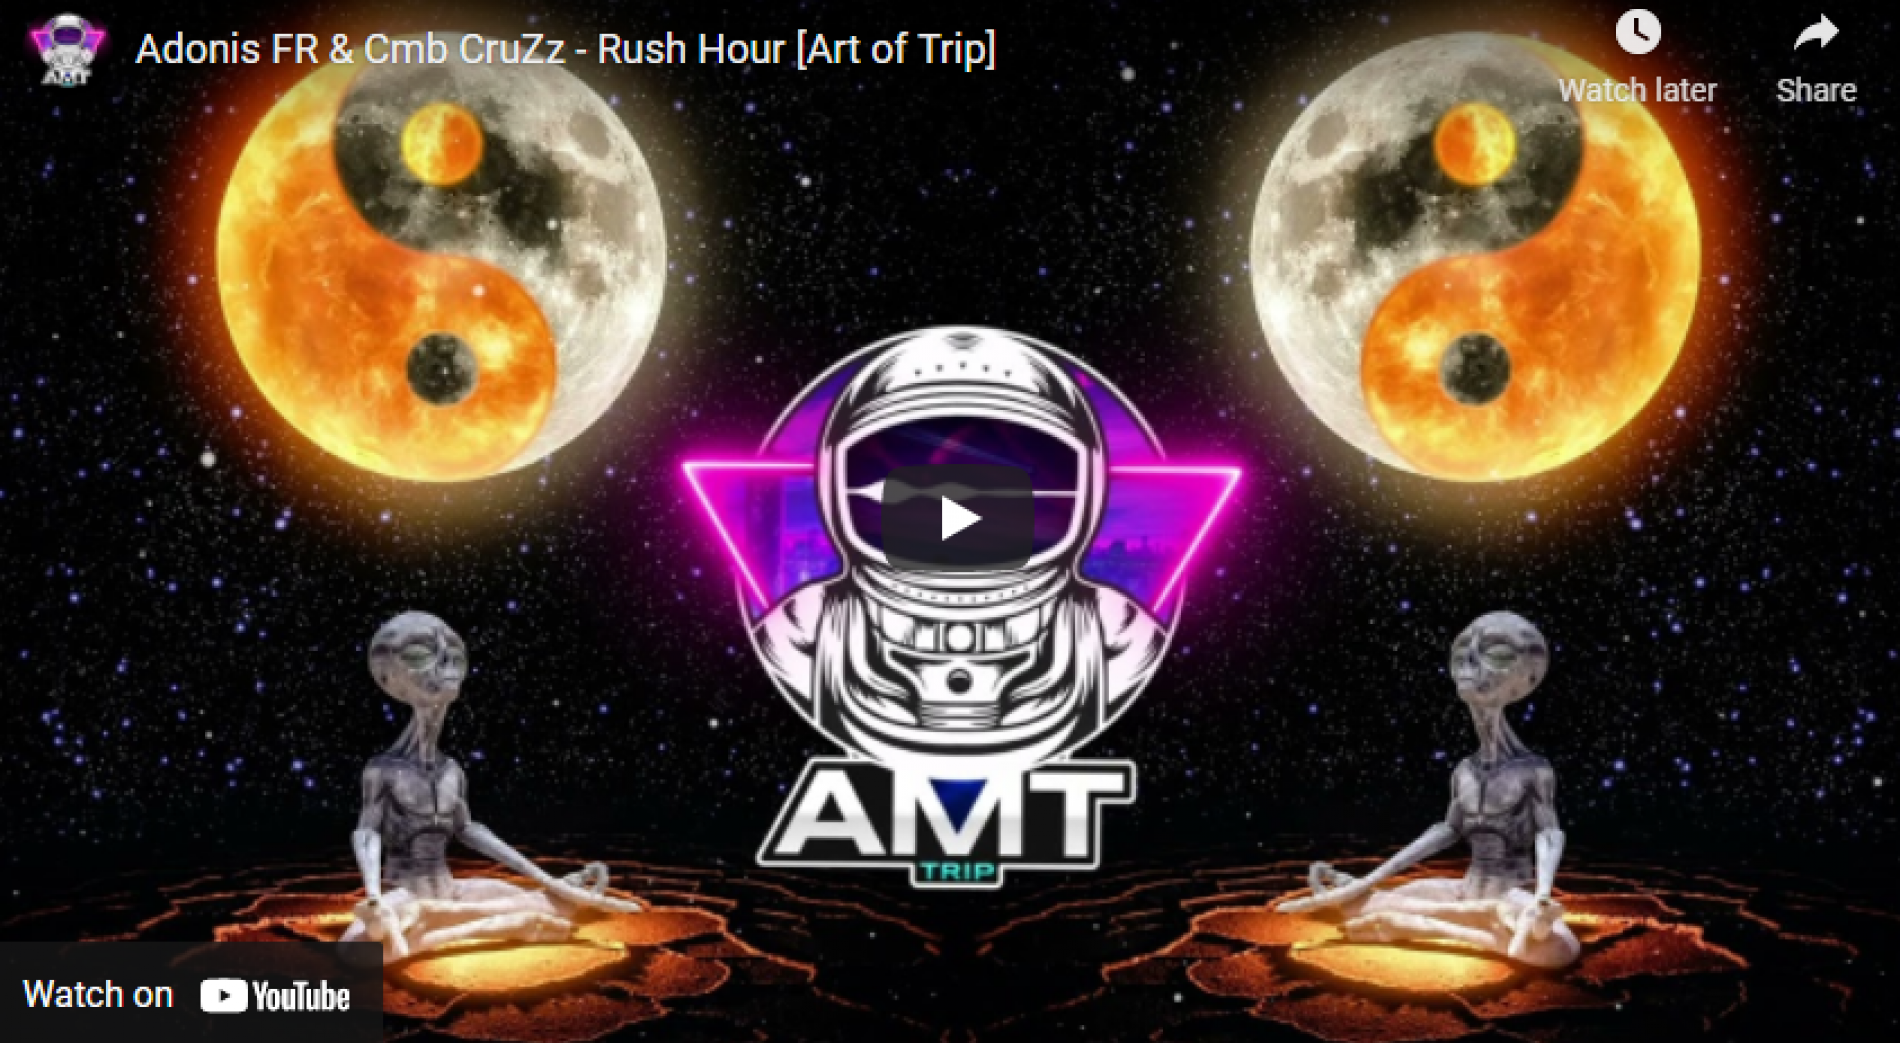 New Music : Adonis FR & Cmb CruZz – Rush Hour [Art of Trip]